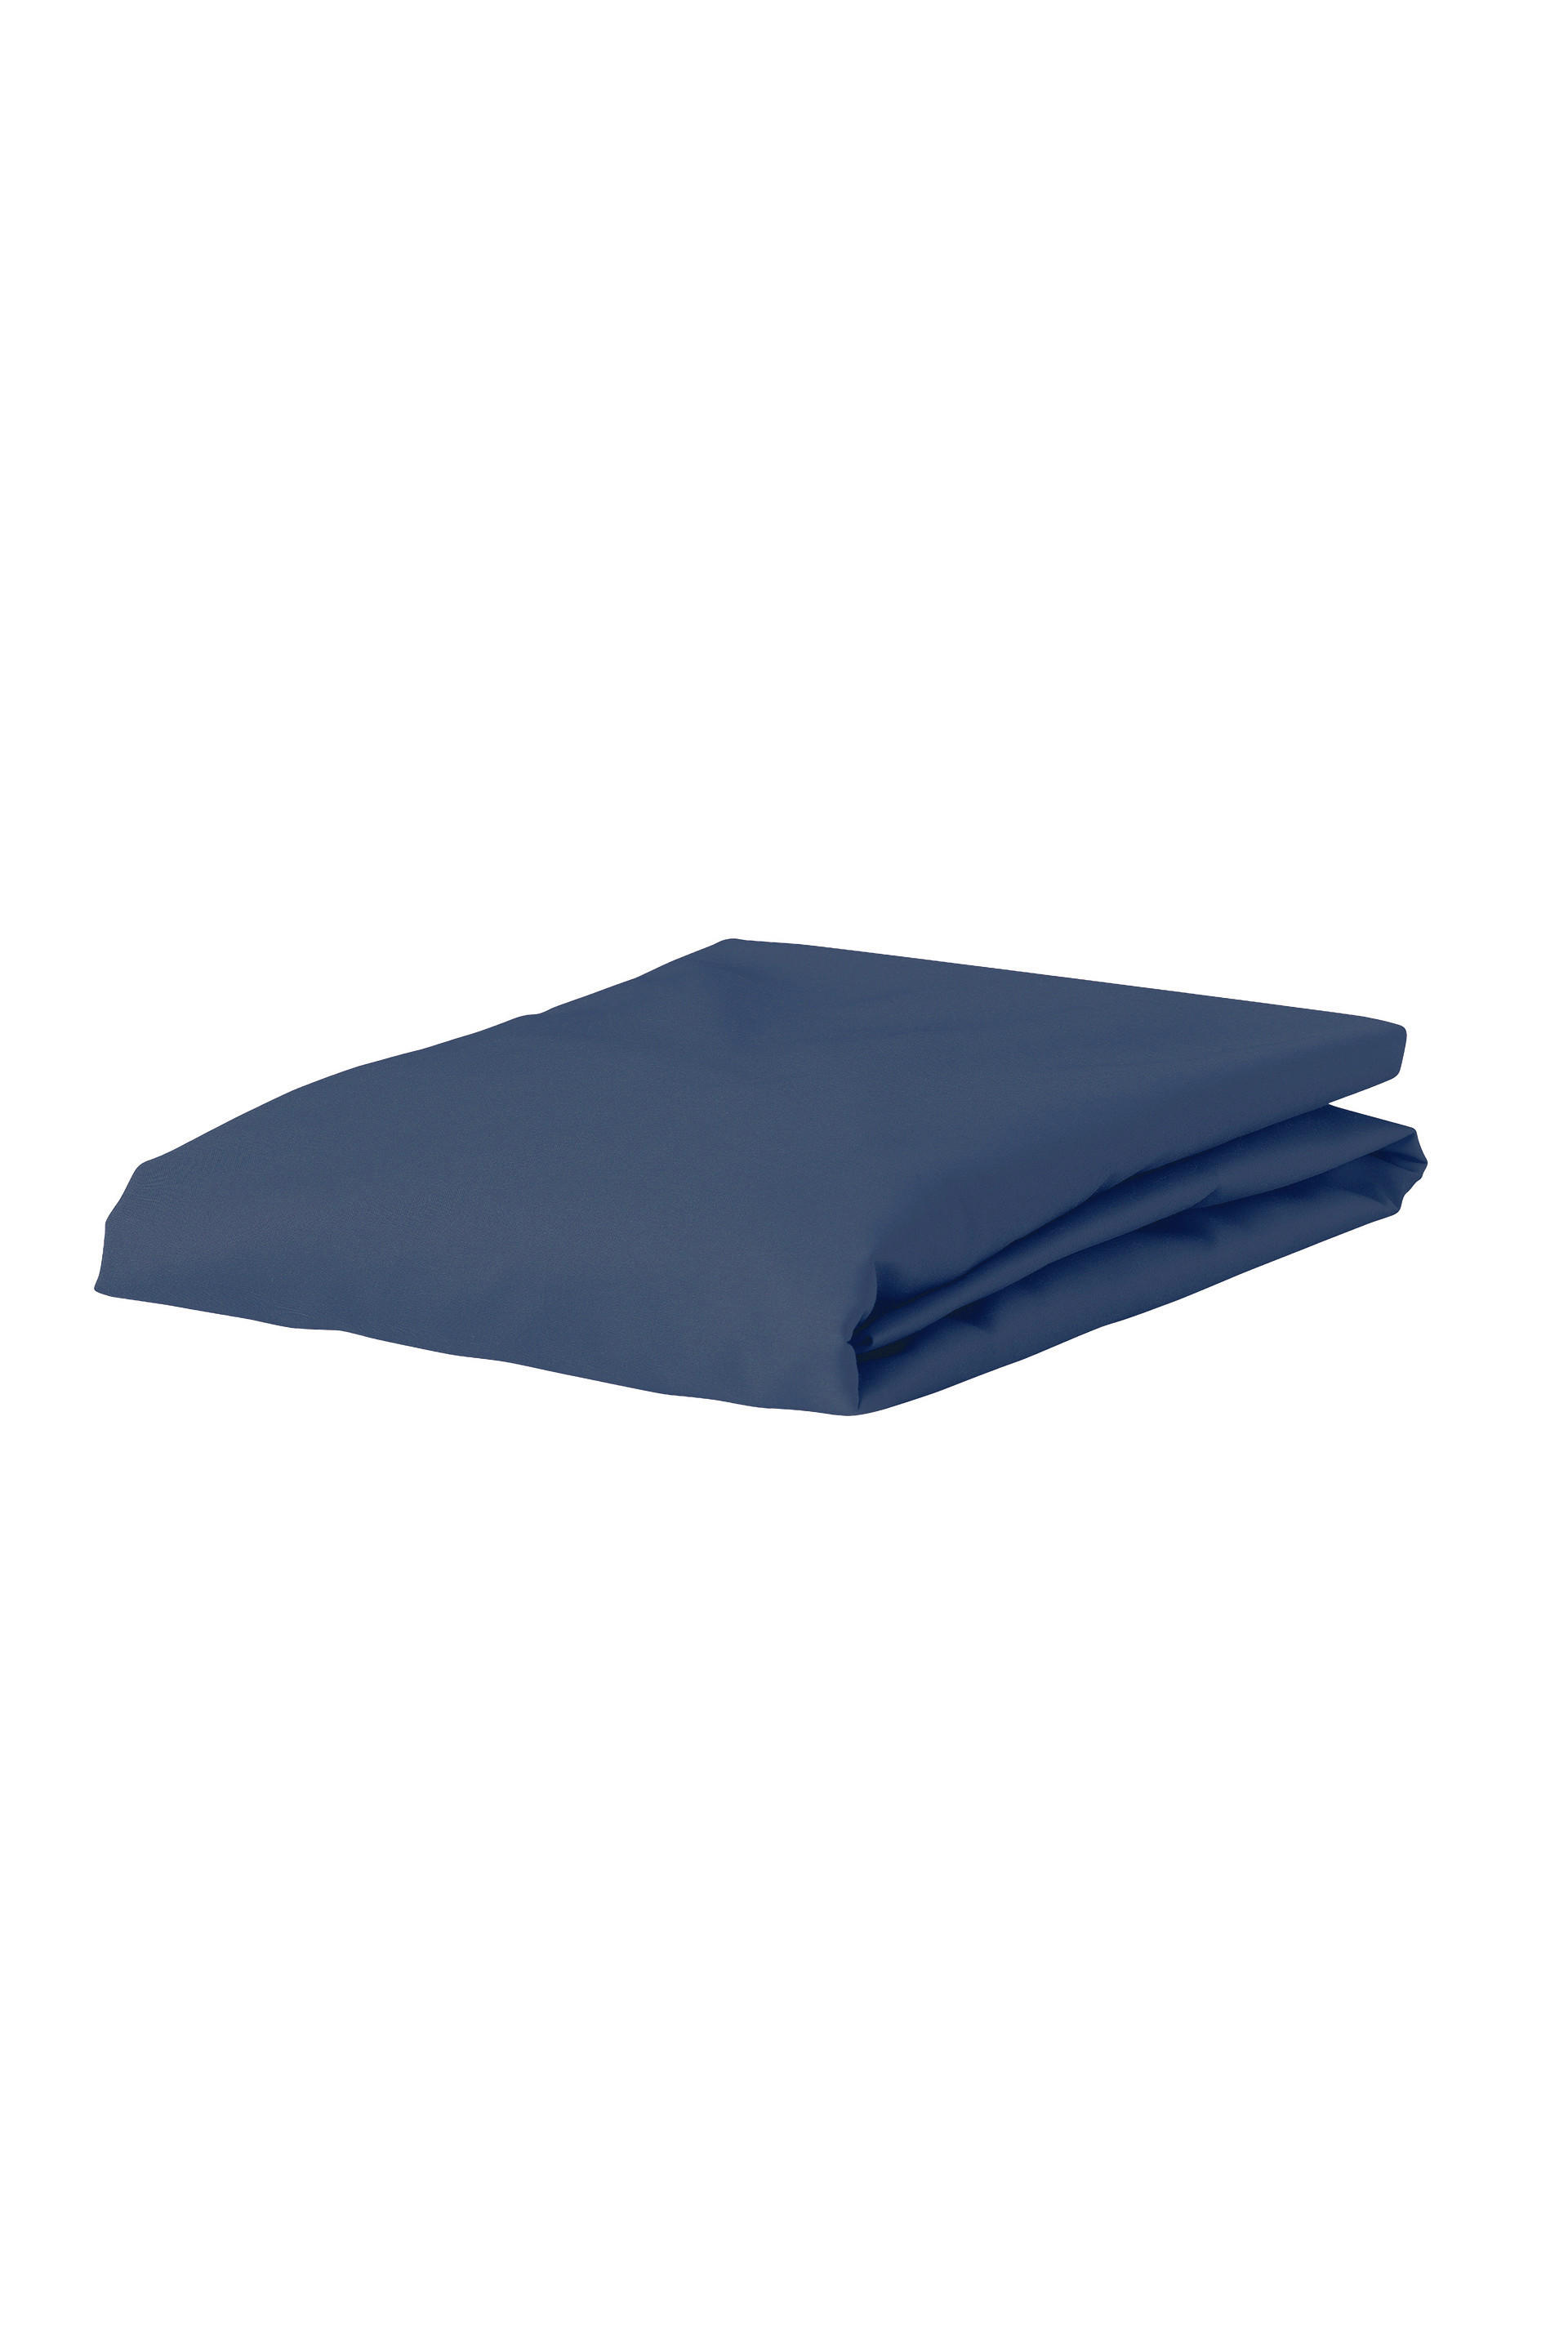 SPANNBETTTUCH E-Sheet Jersey  - Blau/Dunkelblau, Basics, Textil (100/200cm) - Esprit